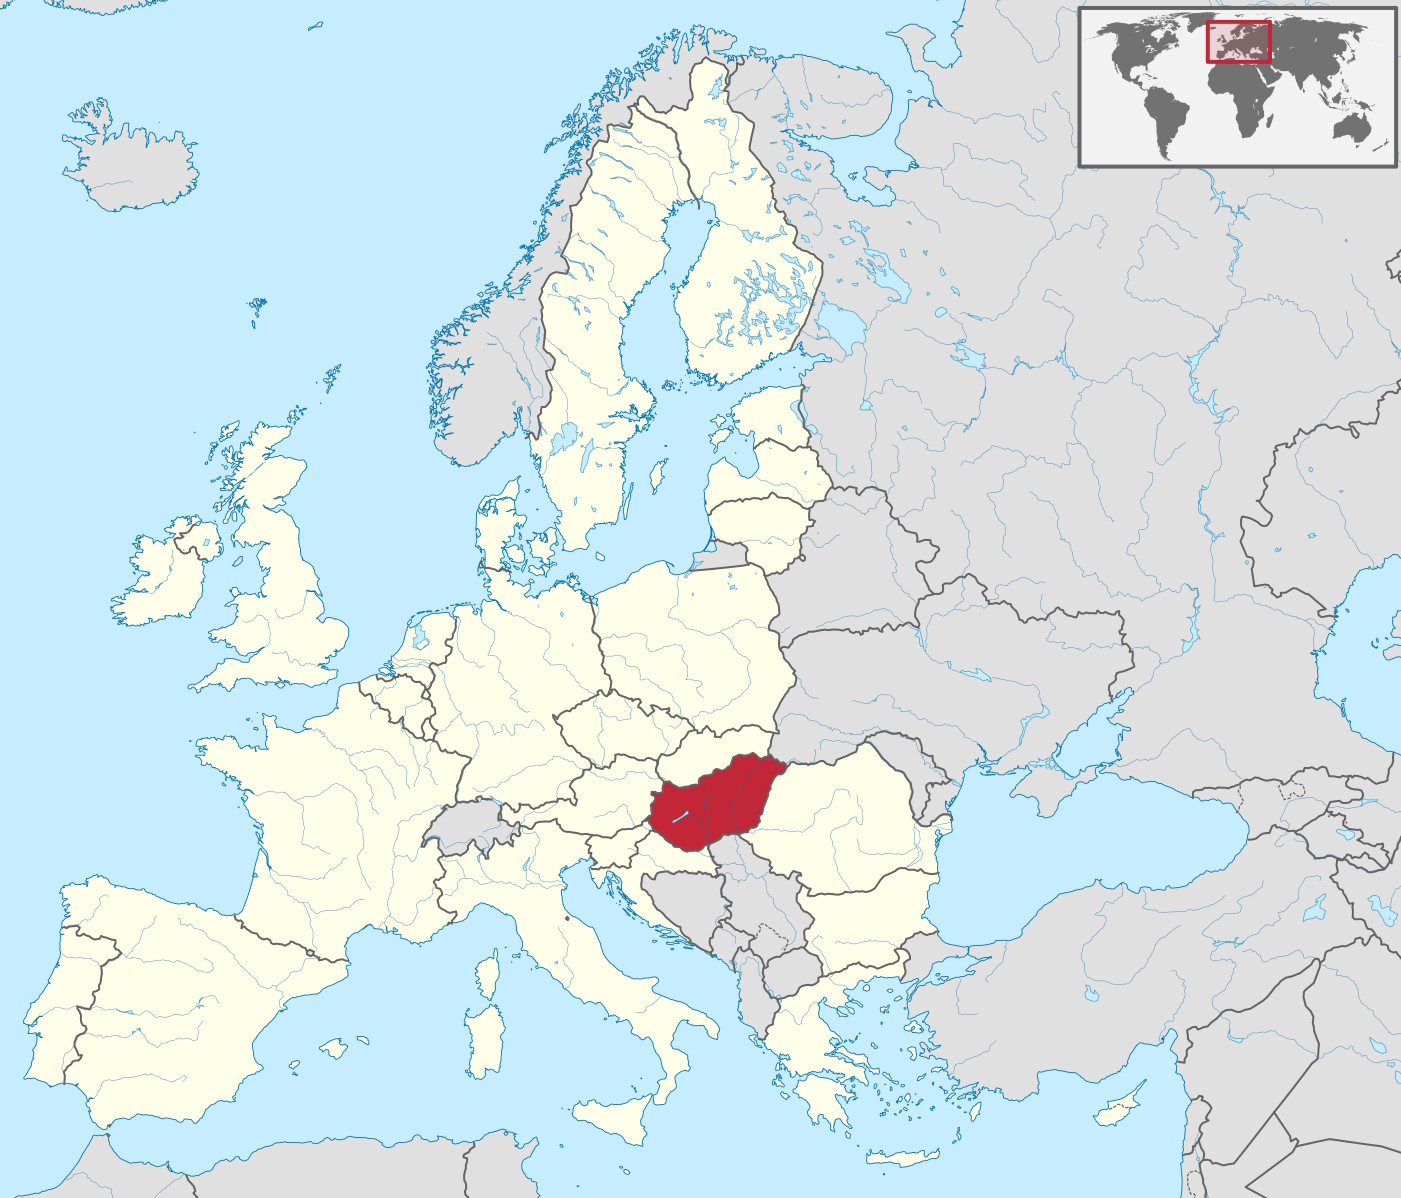 File:Hungary in European Union.jpg